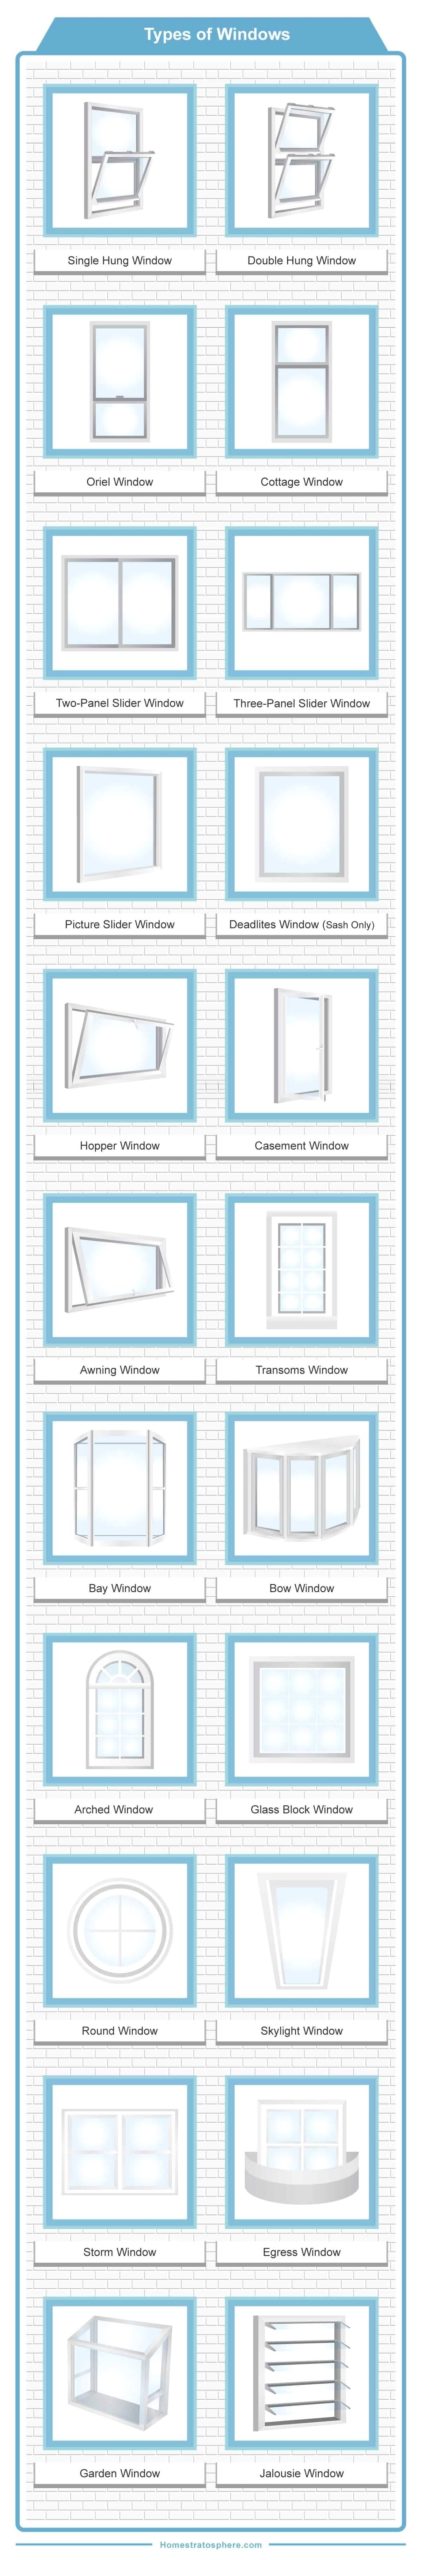 Window types chart 1